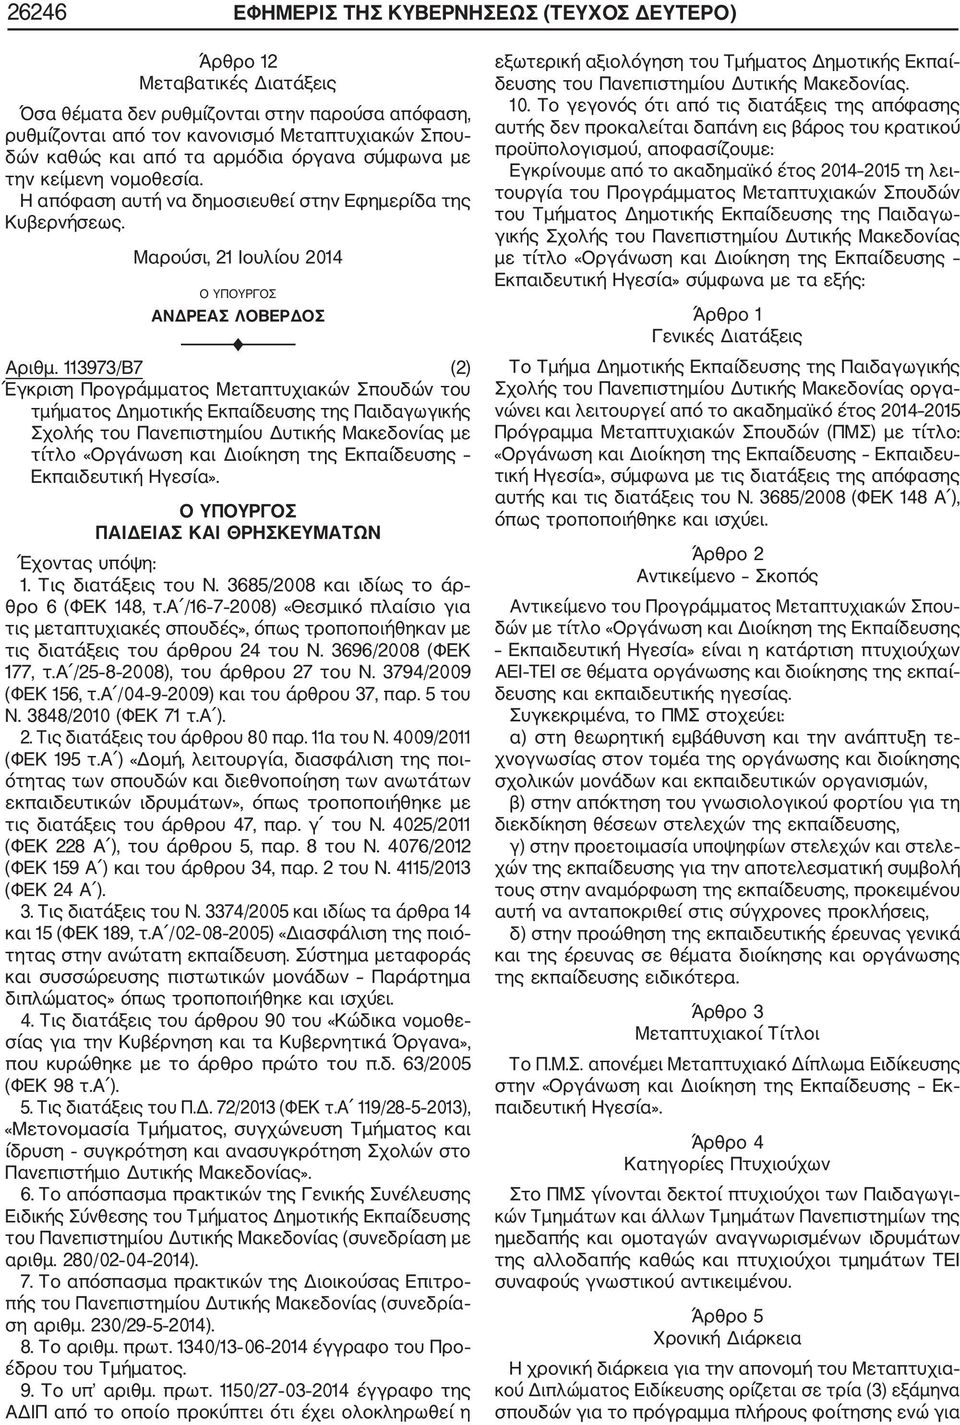 97/B7 () Έγκριση Προγράμματος Μεταπτυχιακών Σπουδών του τμήματος Δημοτικής Εκπαίδευσης της Παιδαγωγικής Σχολής του Πανεπιστημίου Δυτικής Μακεδο νίας με τίτλο «Οργάνωση και Διοίκηση της Εκπαίδευσης